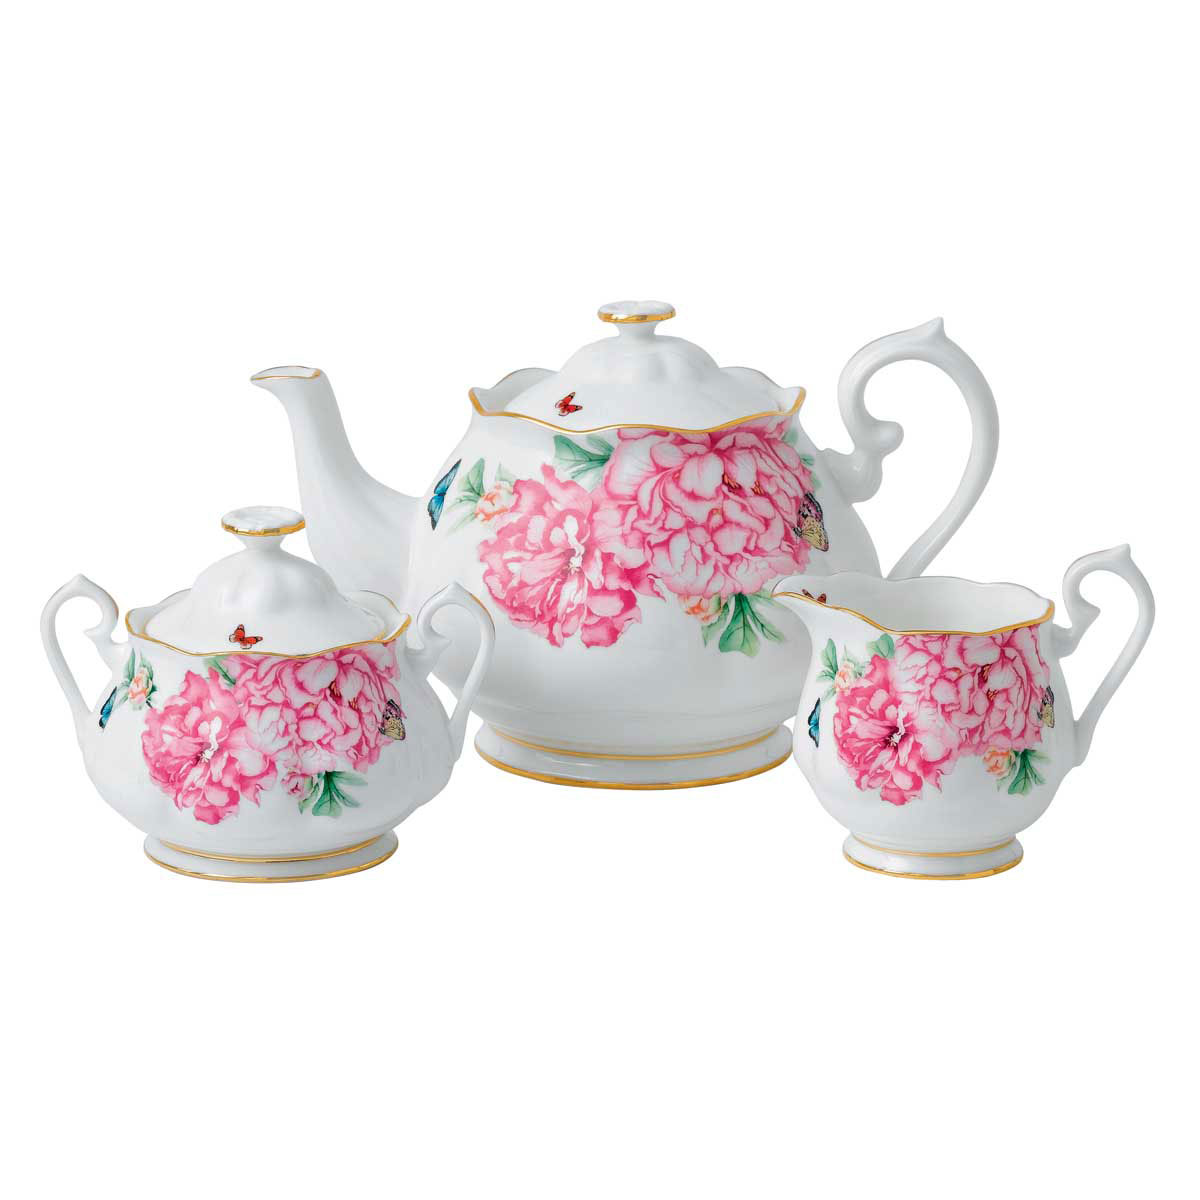 Miranda Kerr For Royal Albert Friendship Teapot, Sugar and Creamer